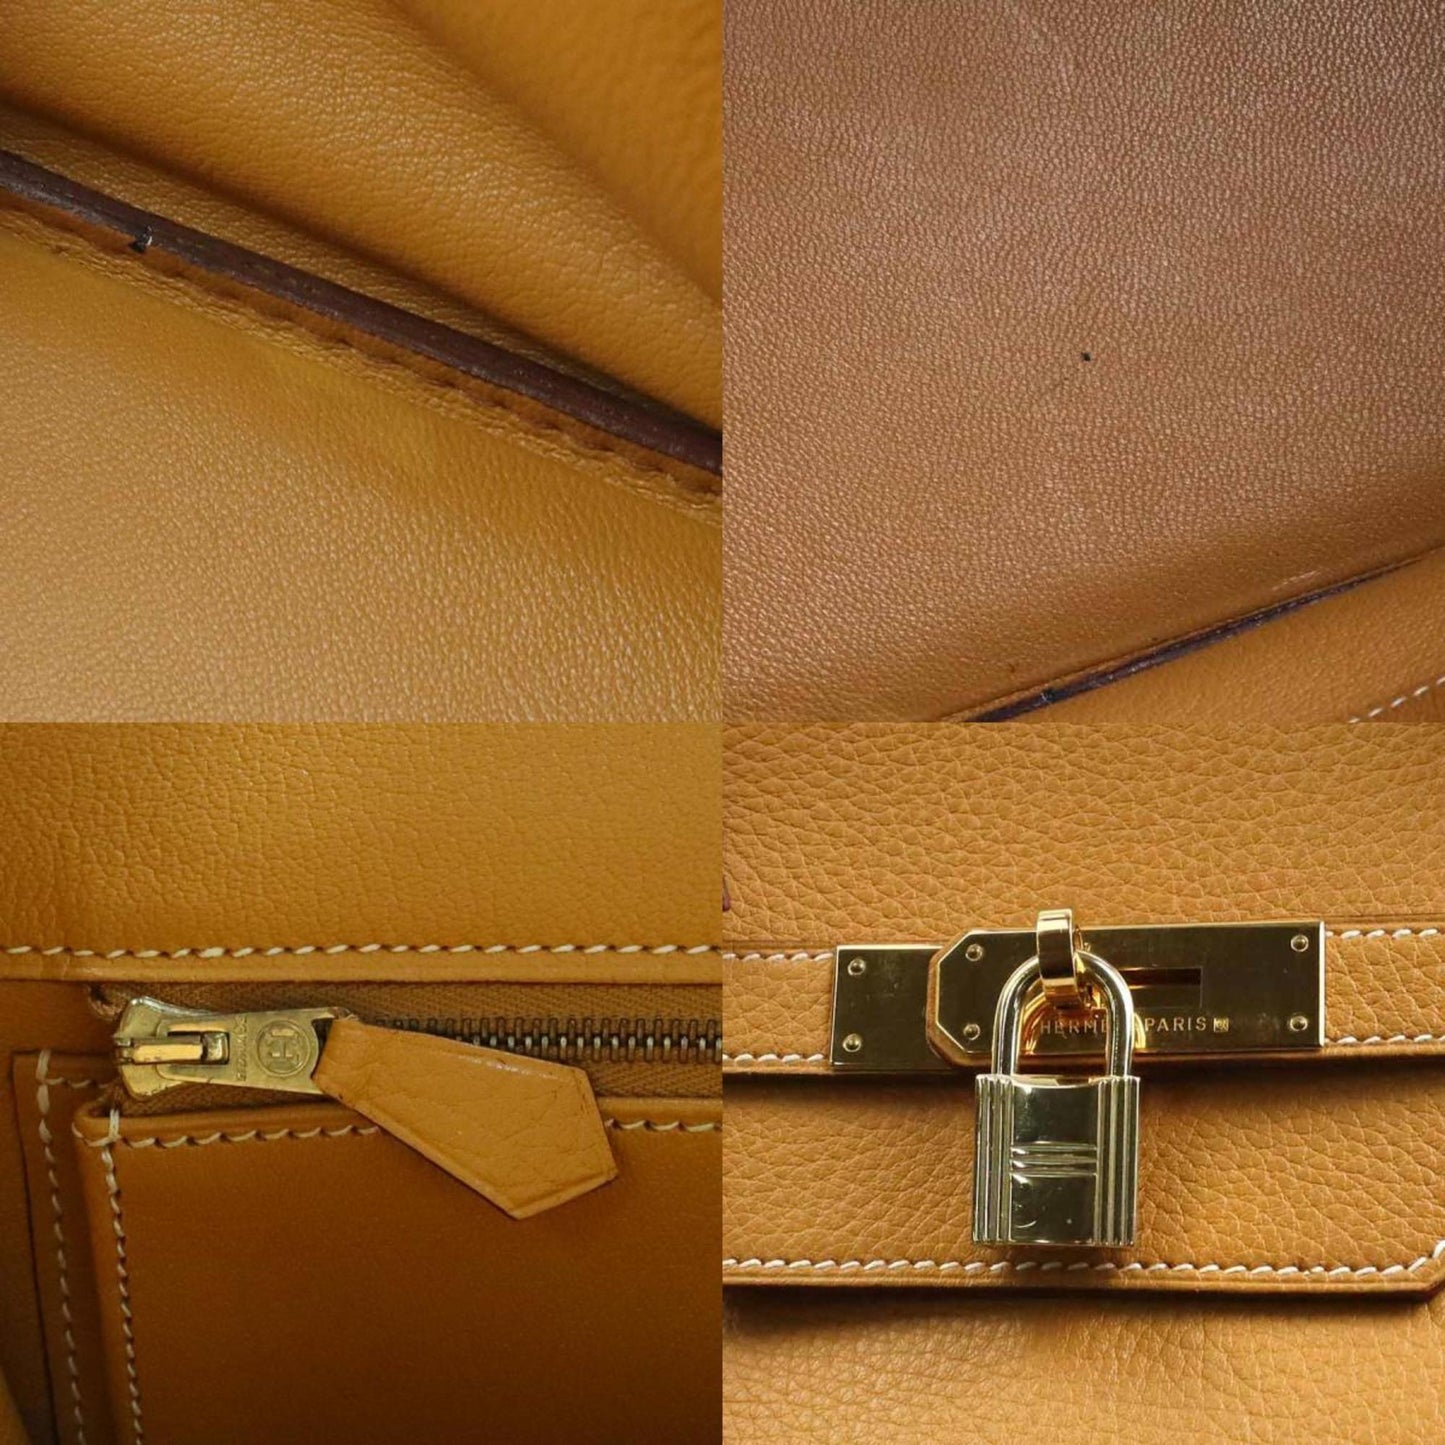 Hermes Women's Ardennes Leather Handbag in Beige